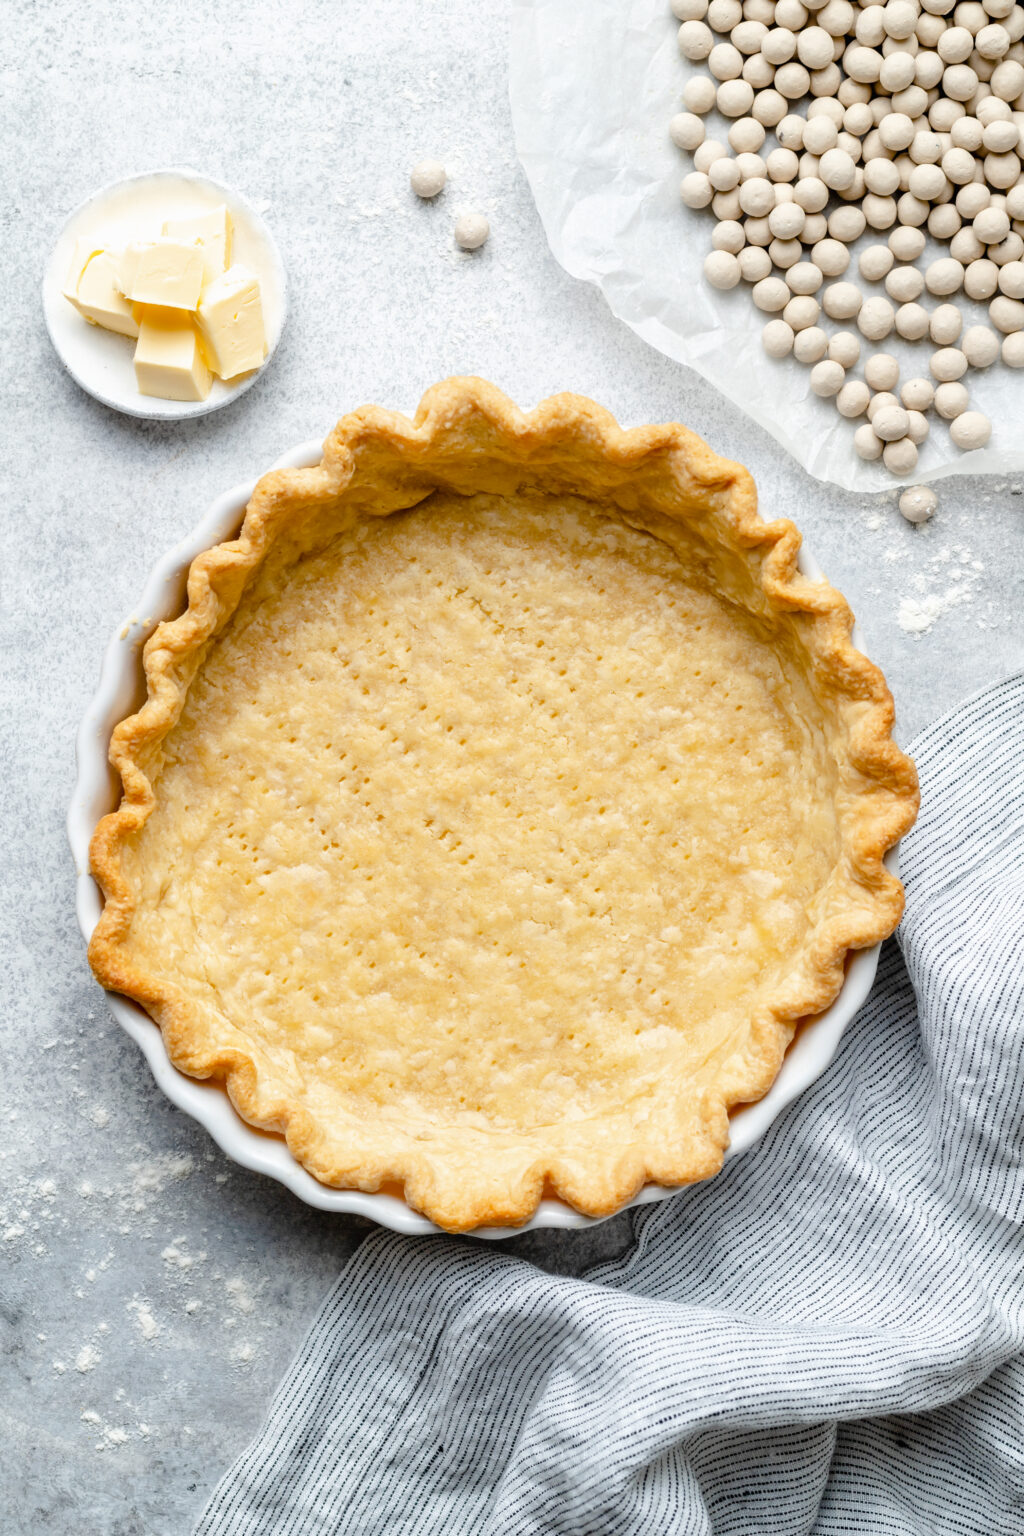 How To Make An All Butter Pie Crust 7 1024x1536 